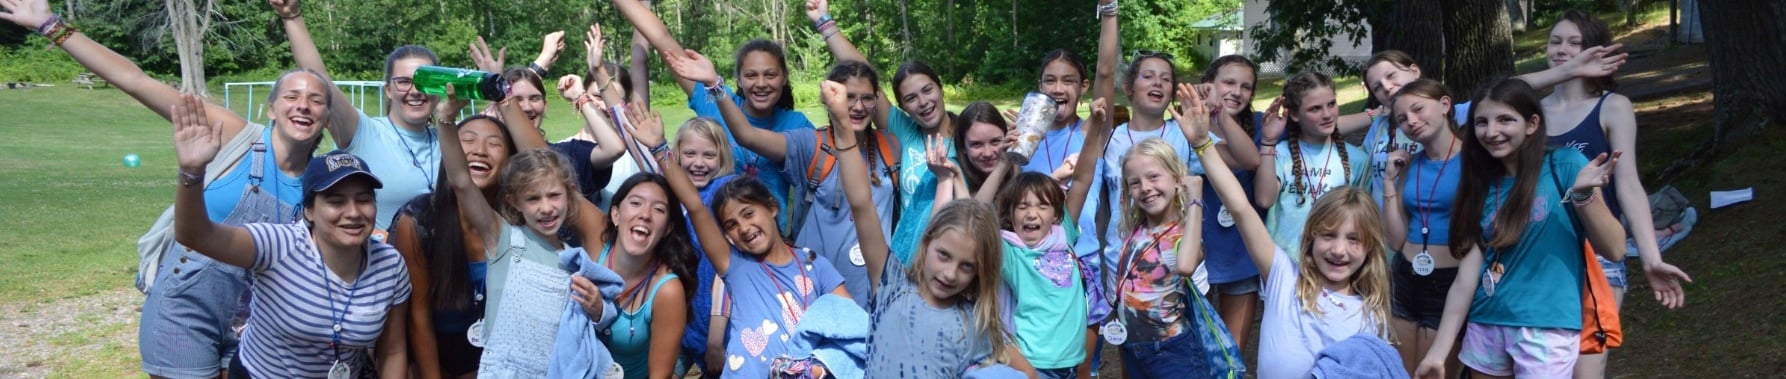 5 Ways Girls Build Lifelong Friendships at Summer Camp WeHakee